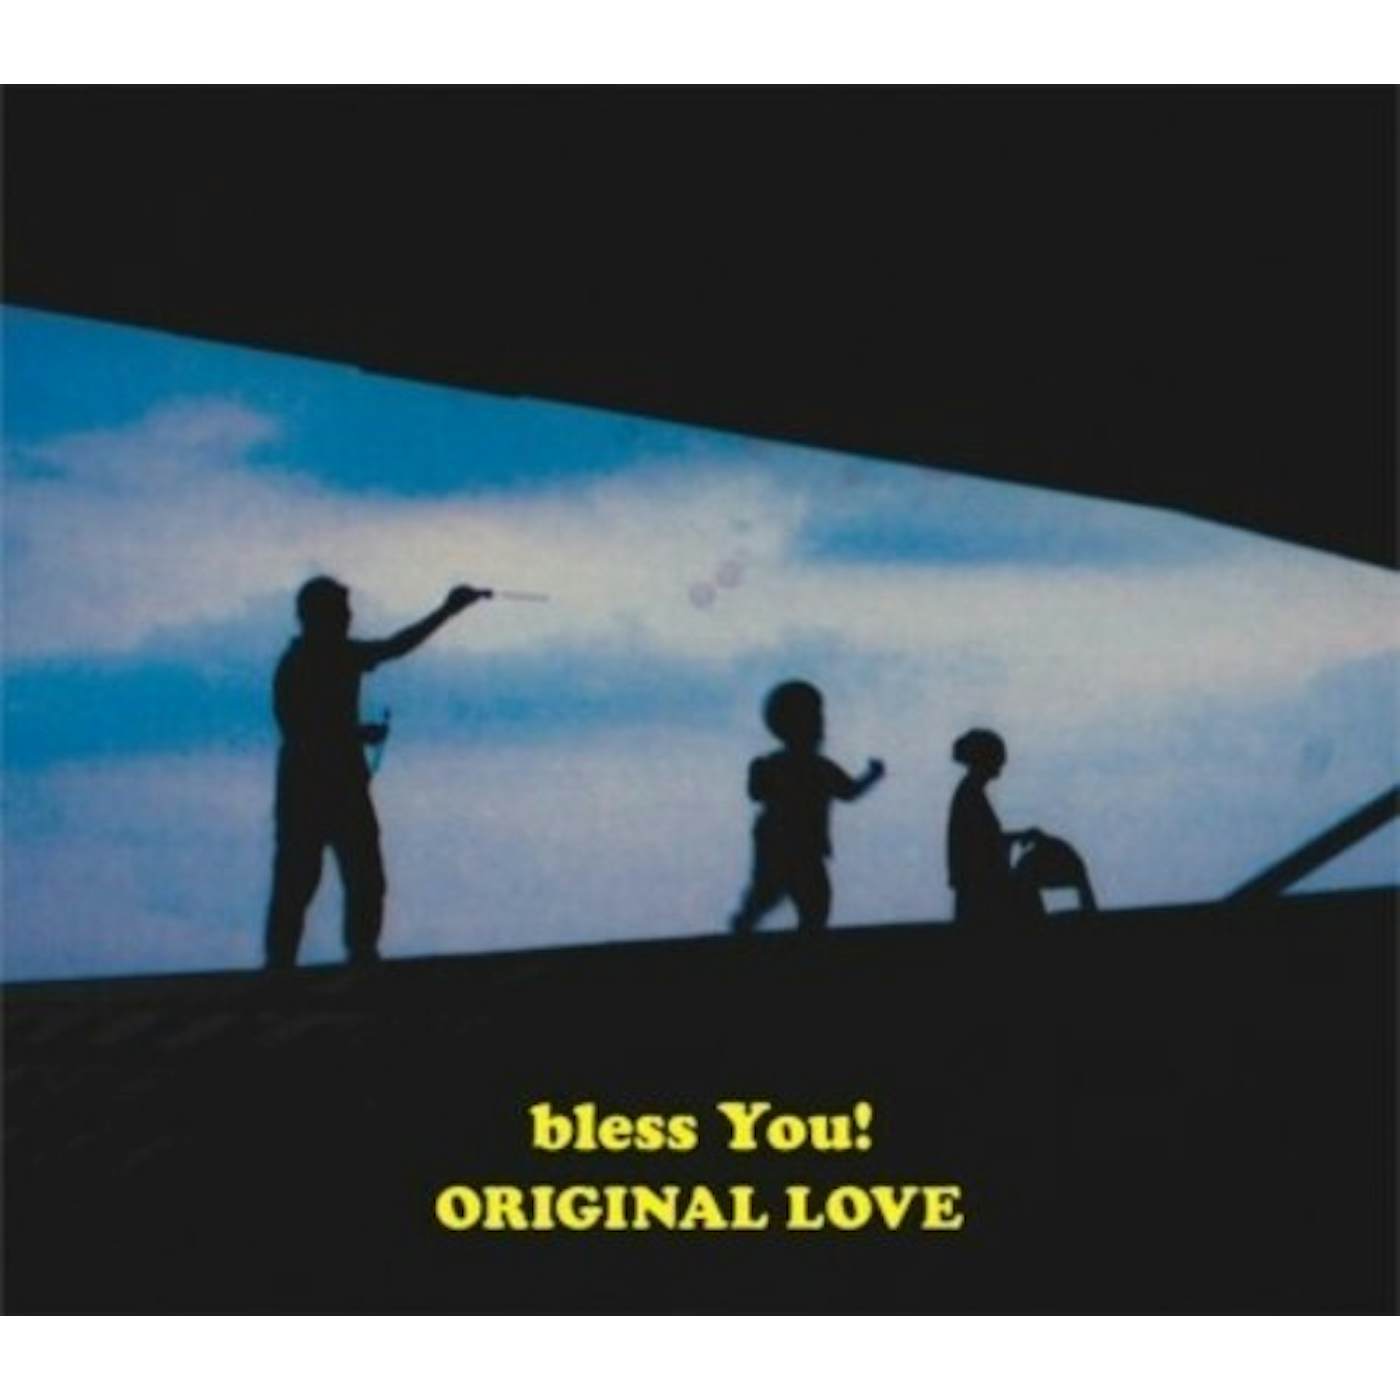 Original Love Bless You! Vinyl Record